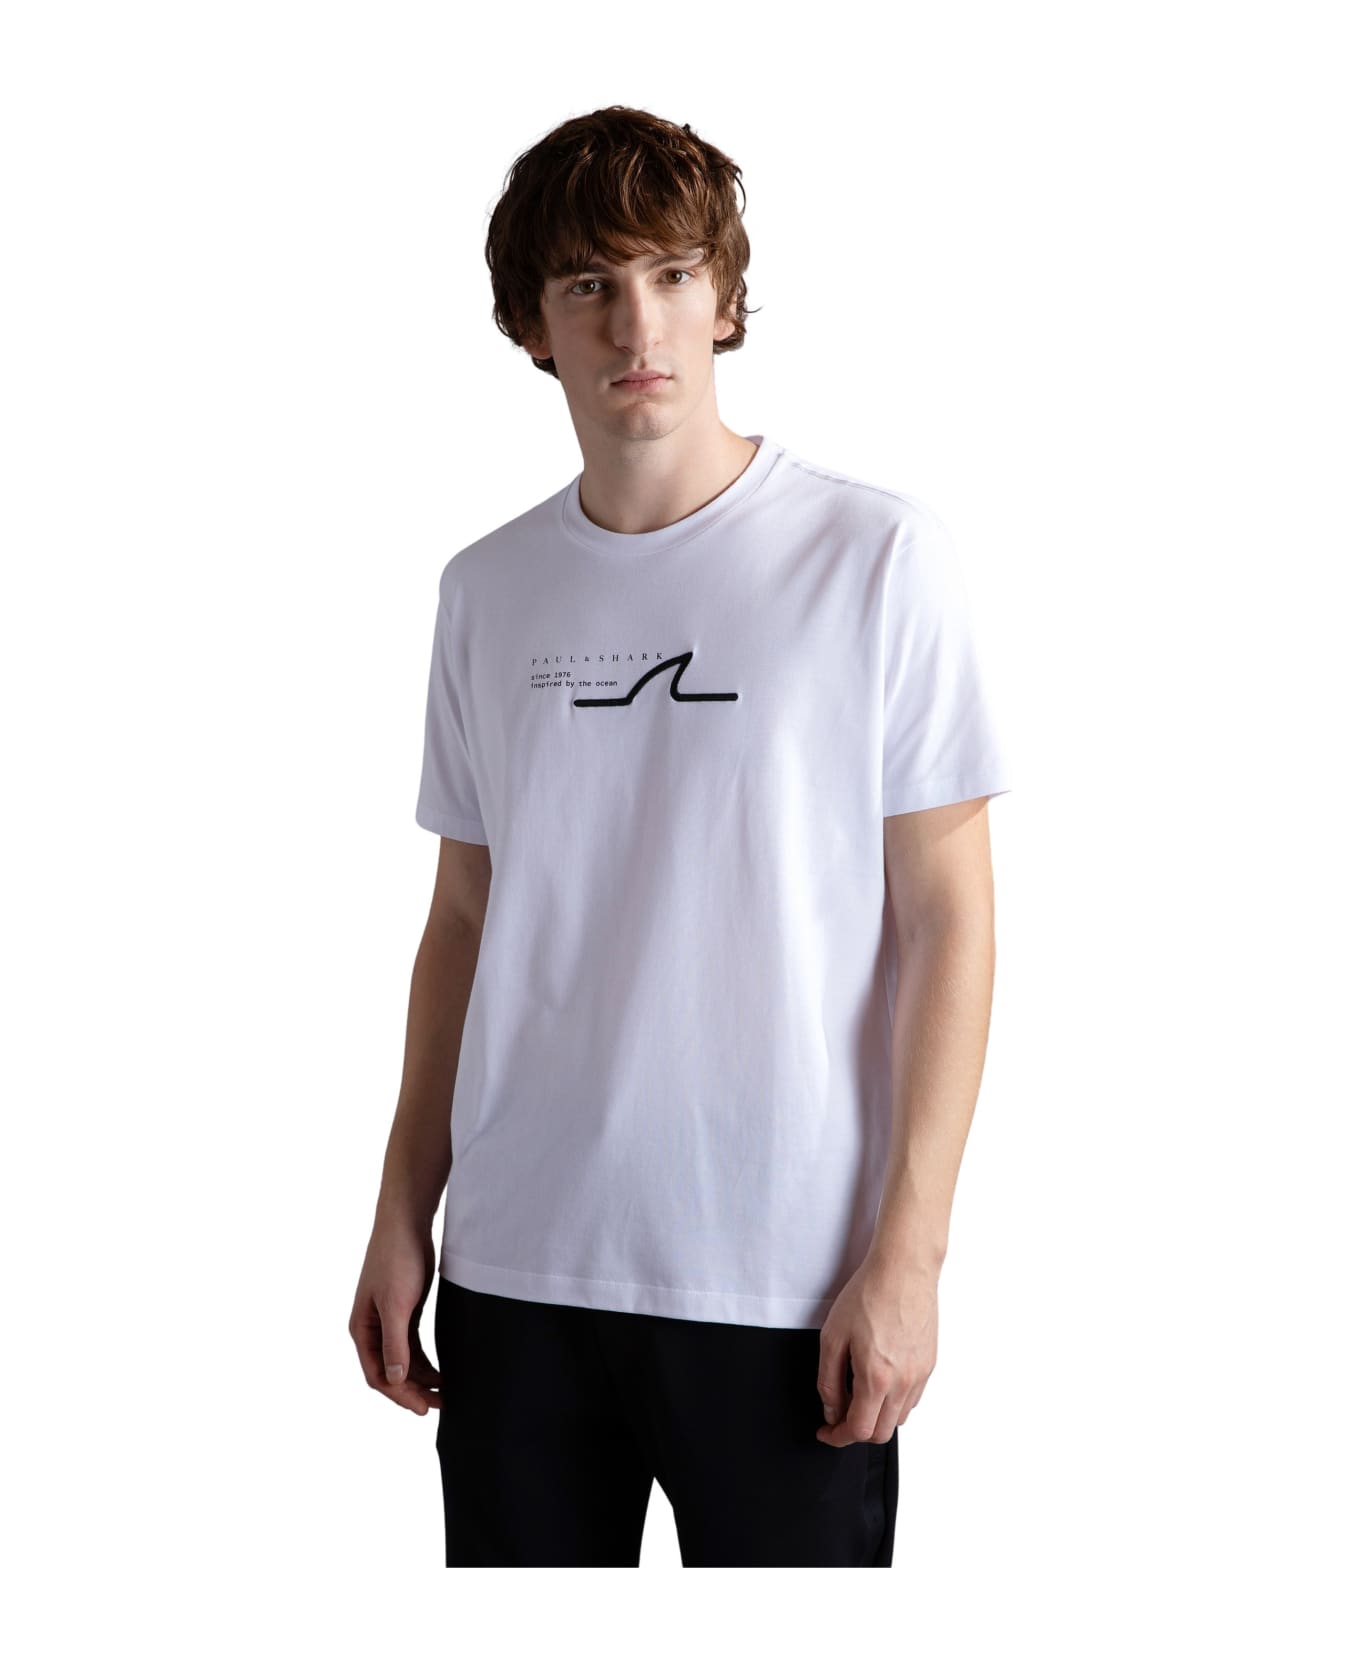 Paul&Shark Tshirt - White